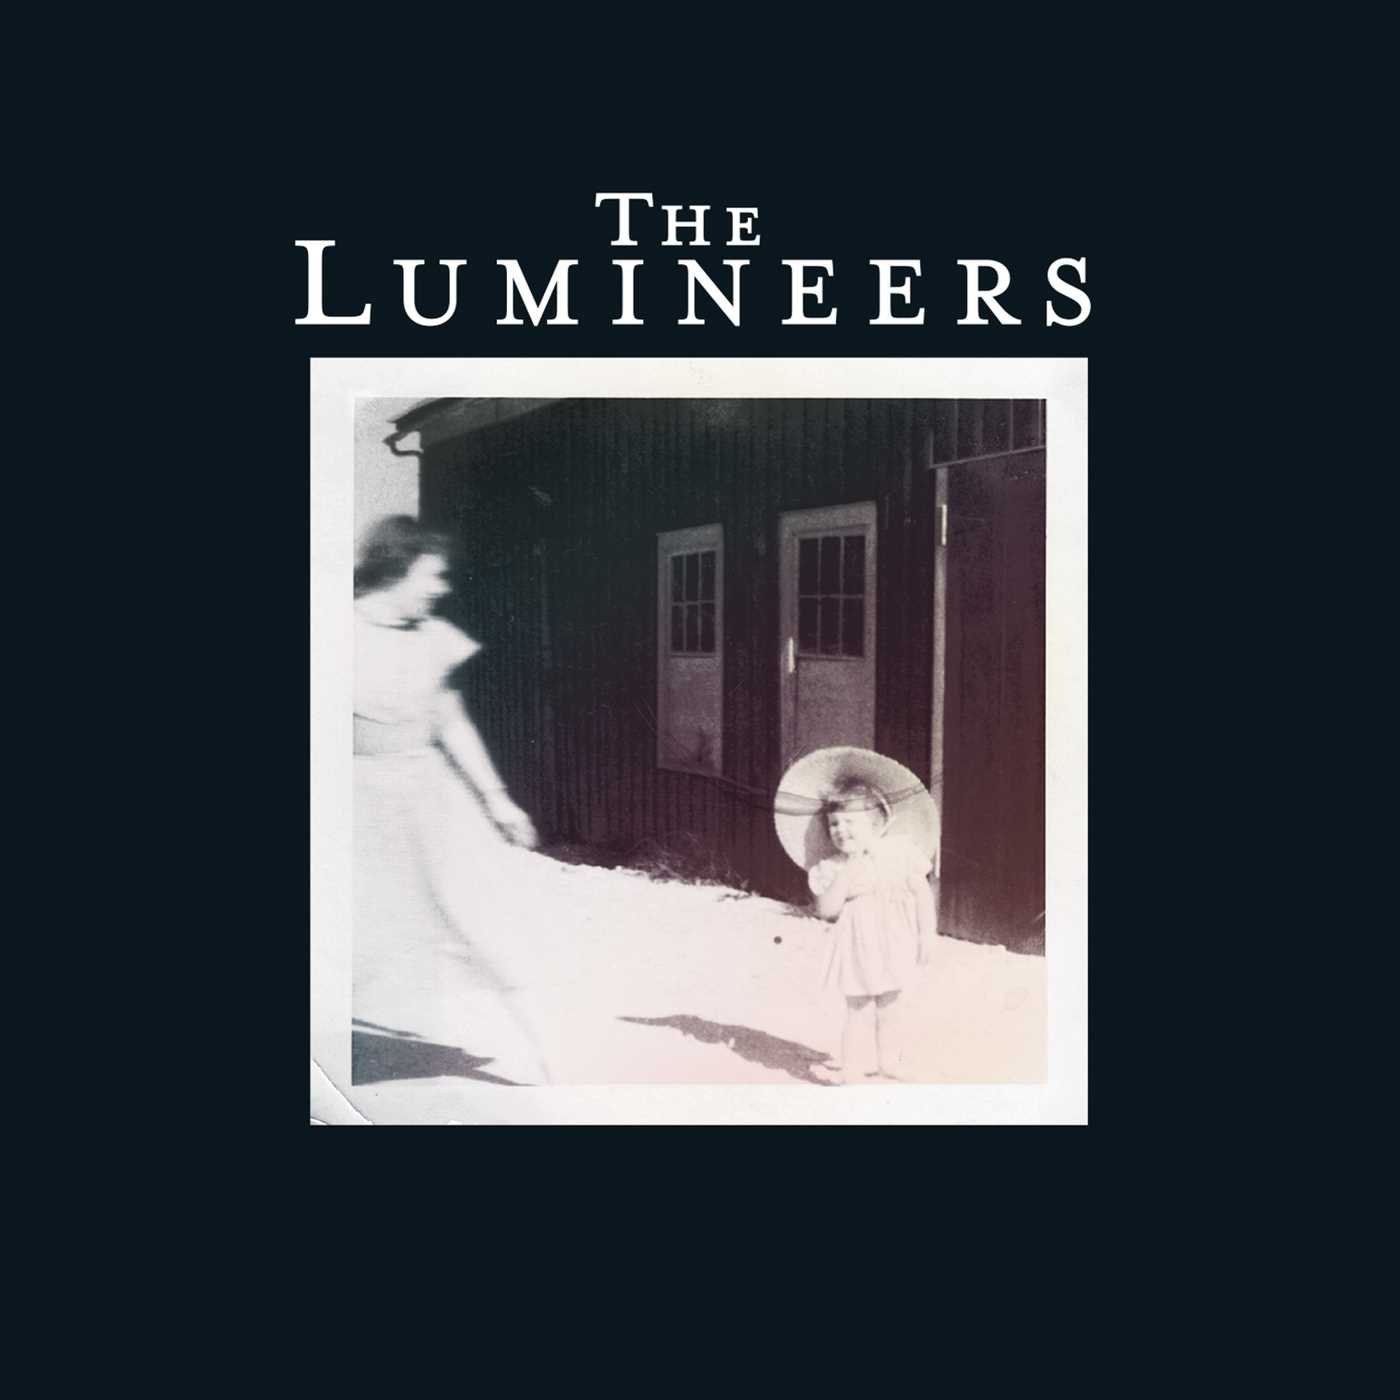 The Lumineers "The Lumineers" LP